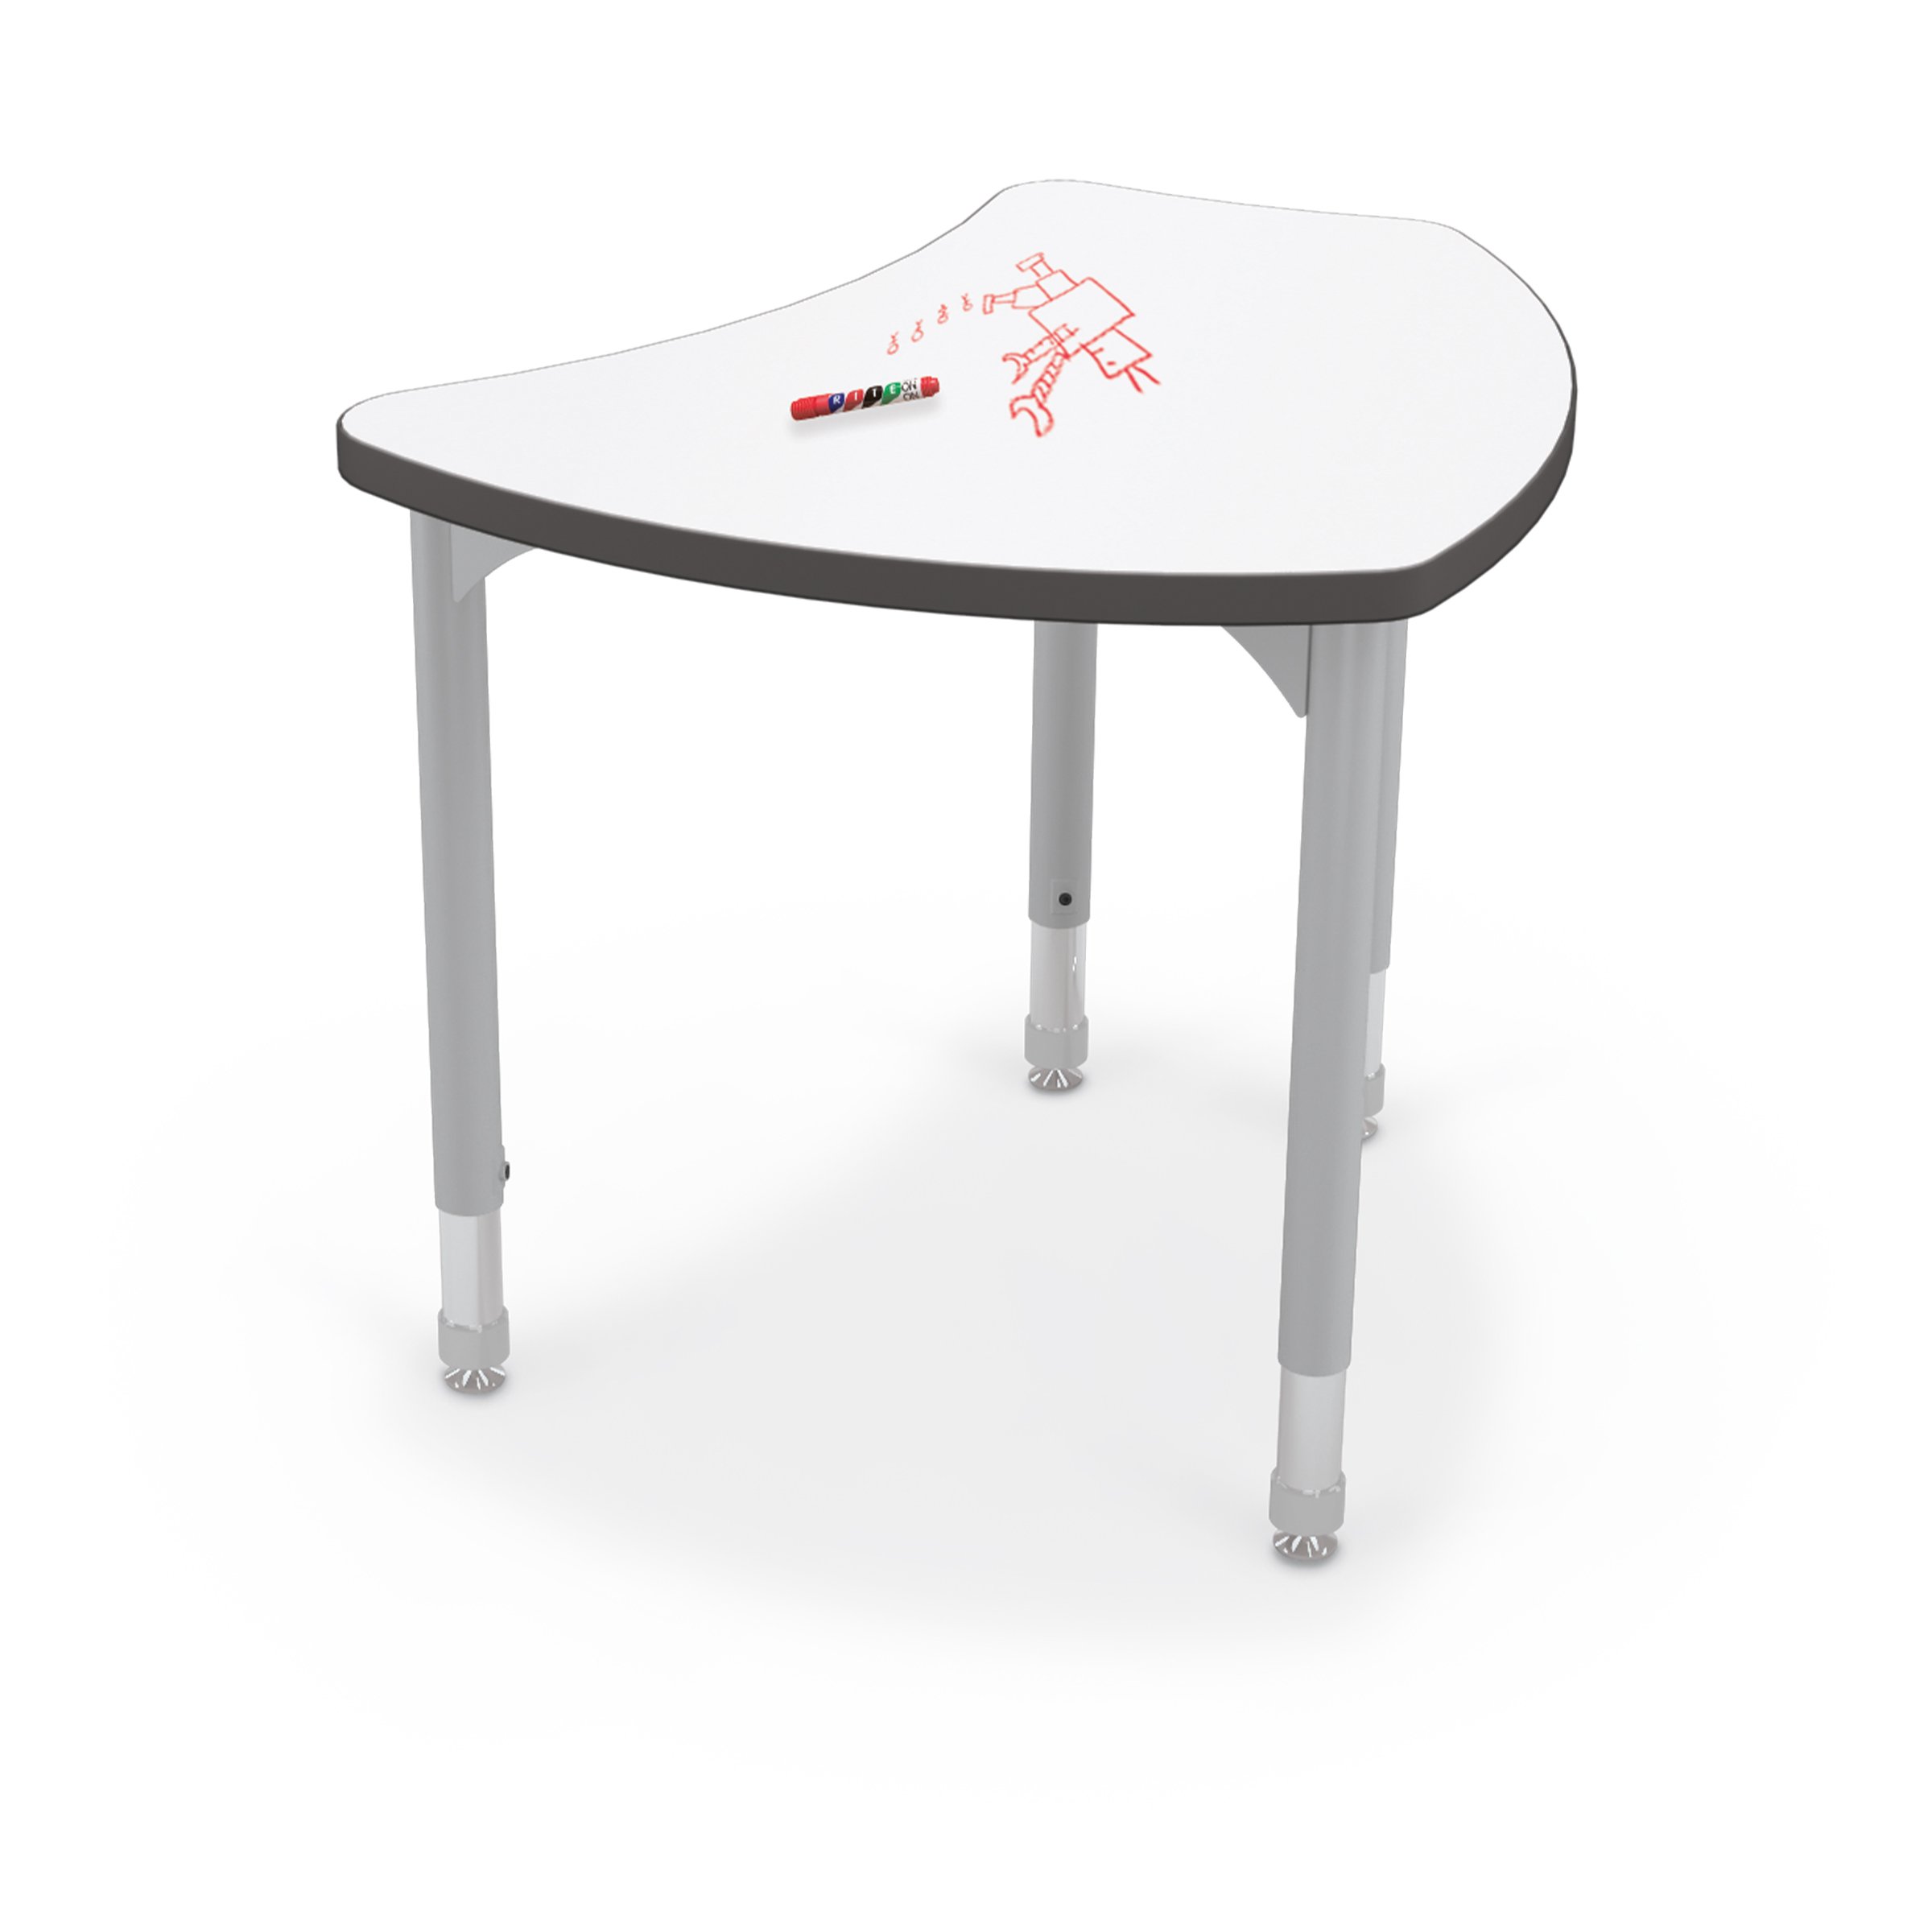 MooreCo Porcelain Steel top desk